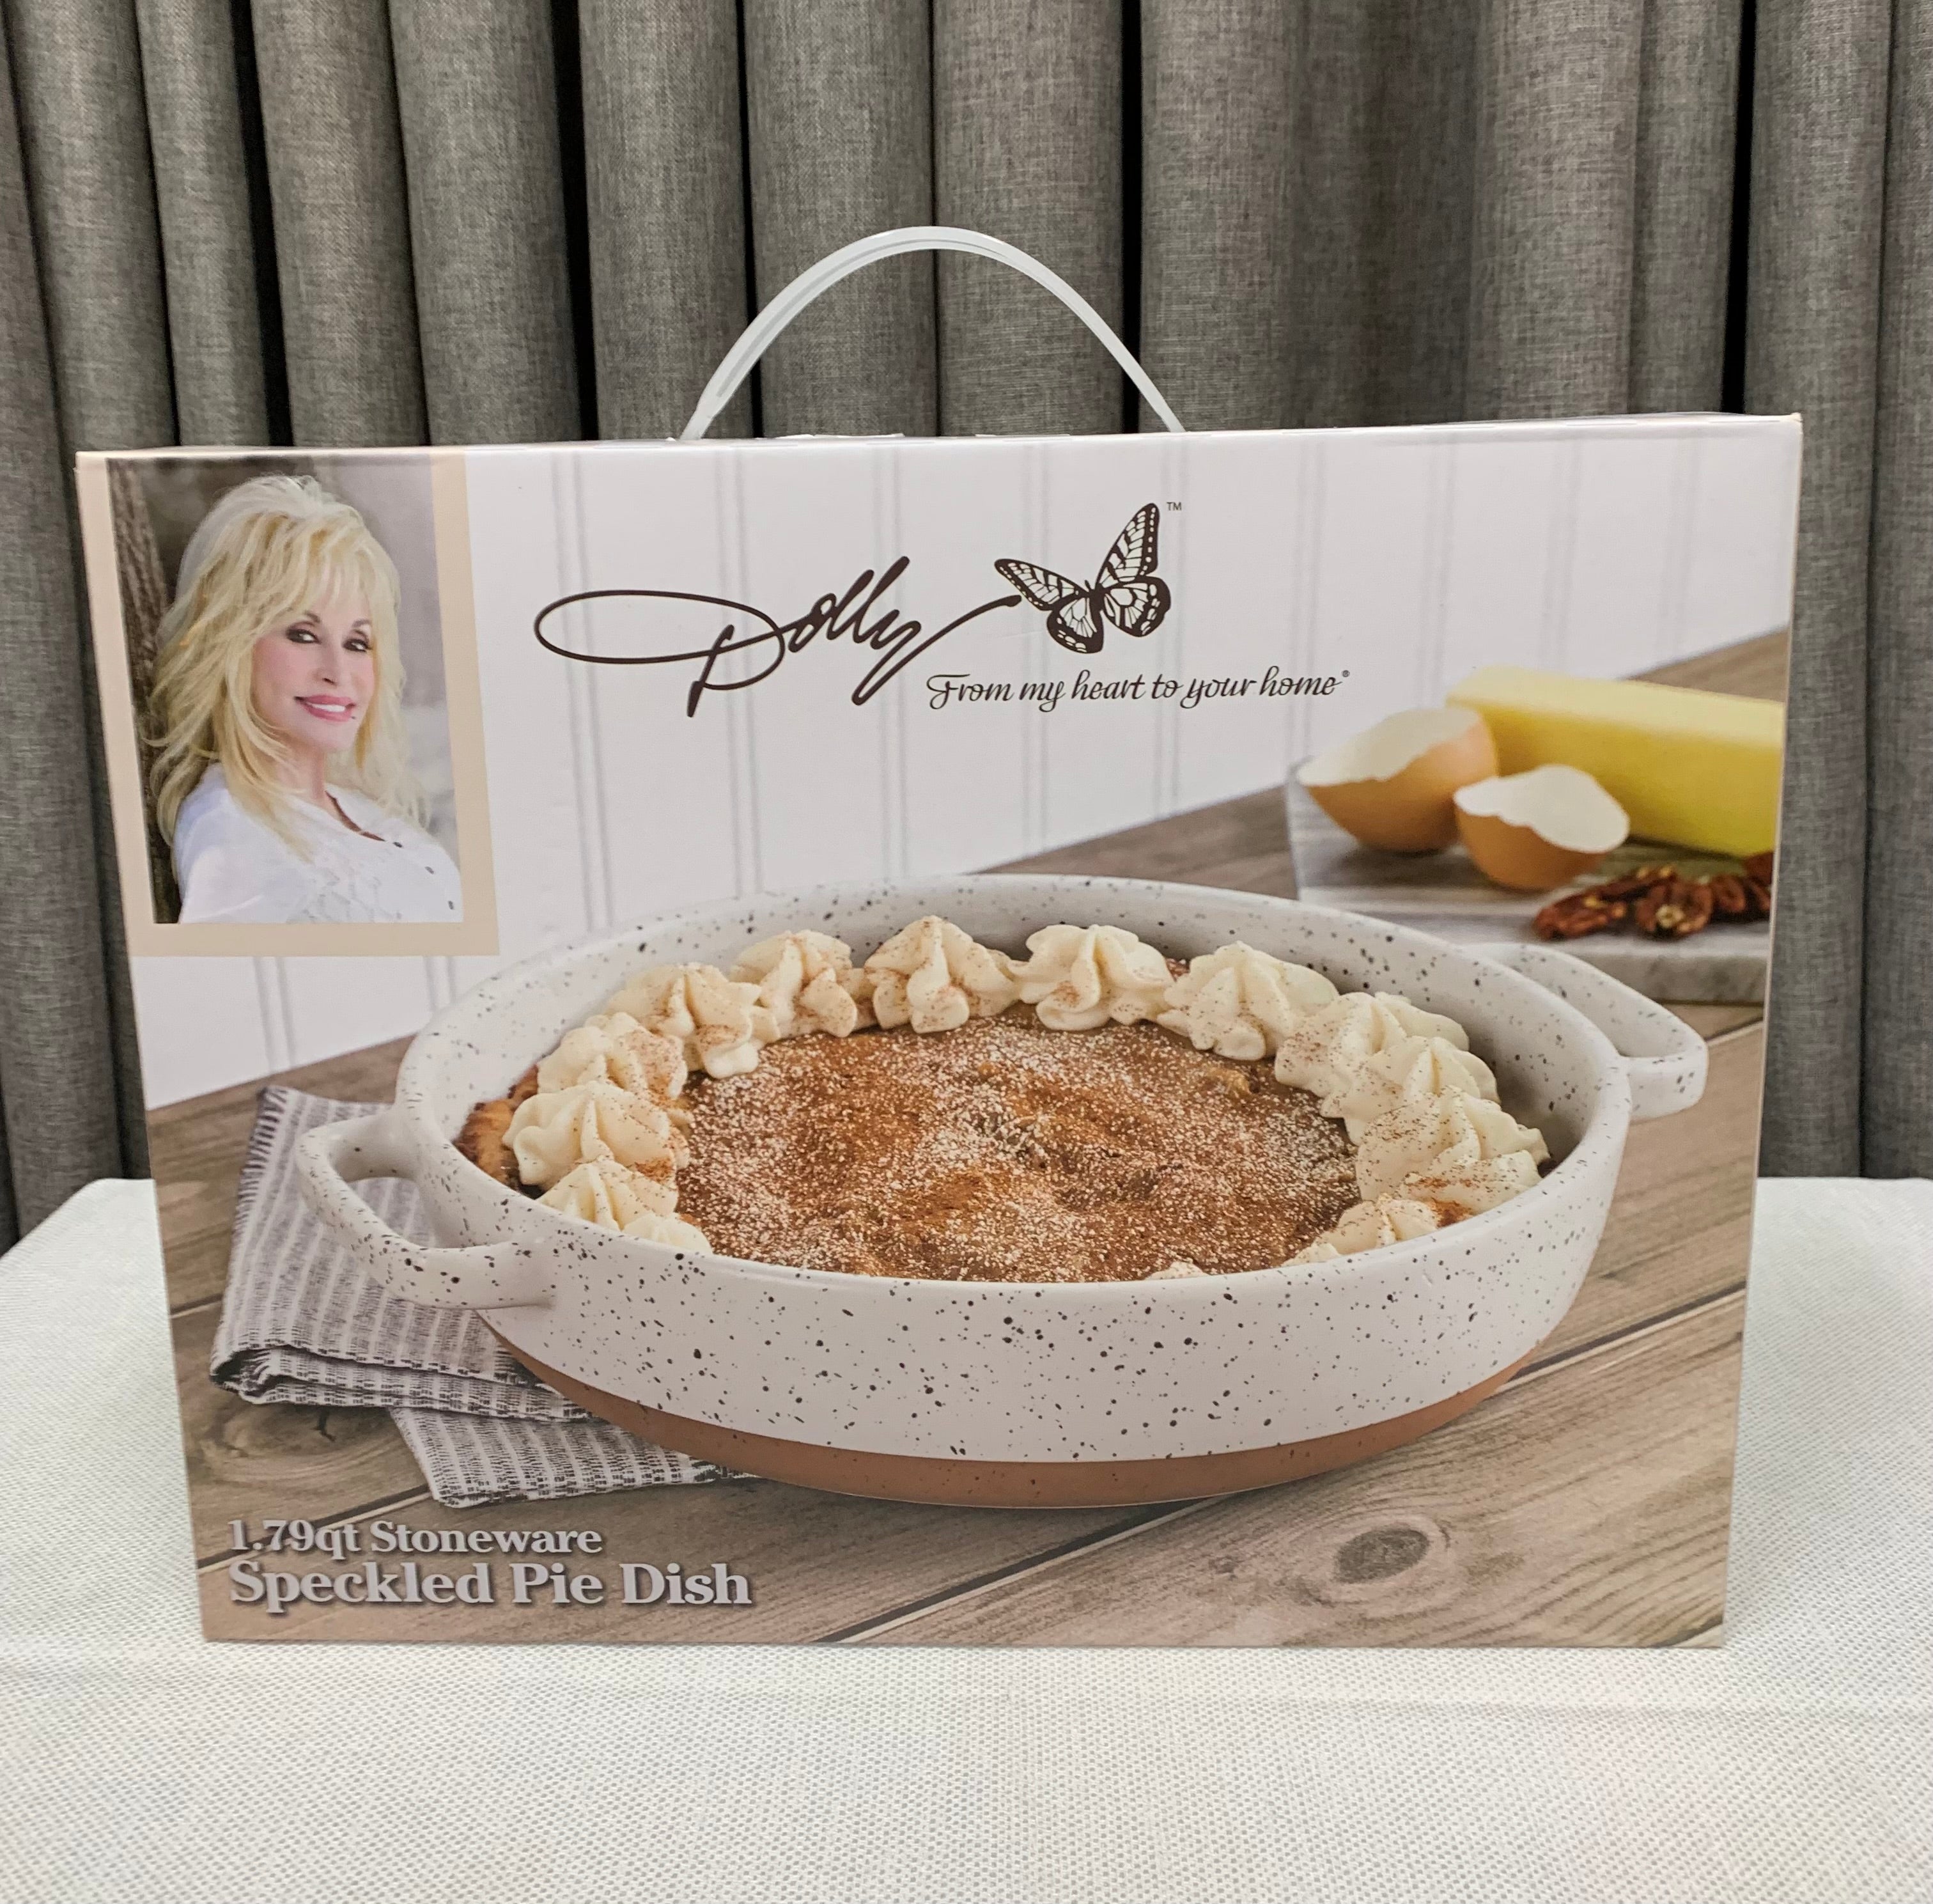 Dolly Parton 1.79qt Stoneware Speckled Pie Dish